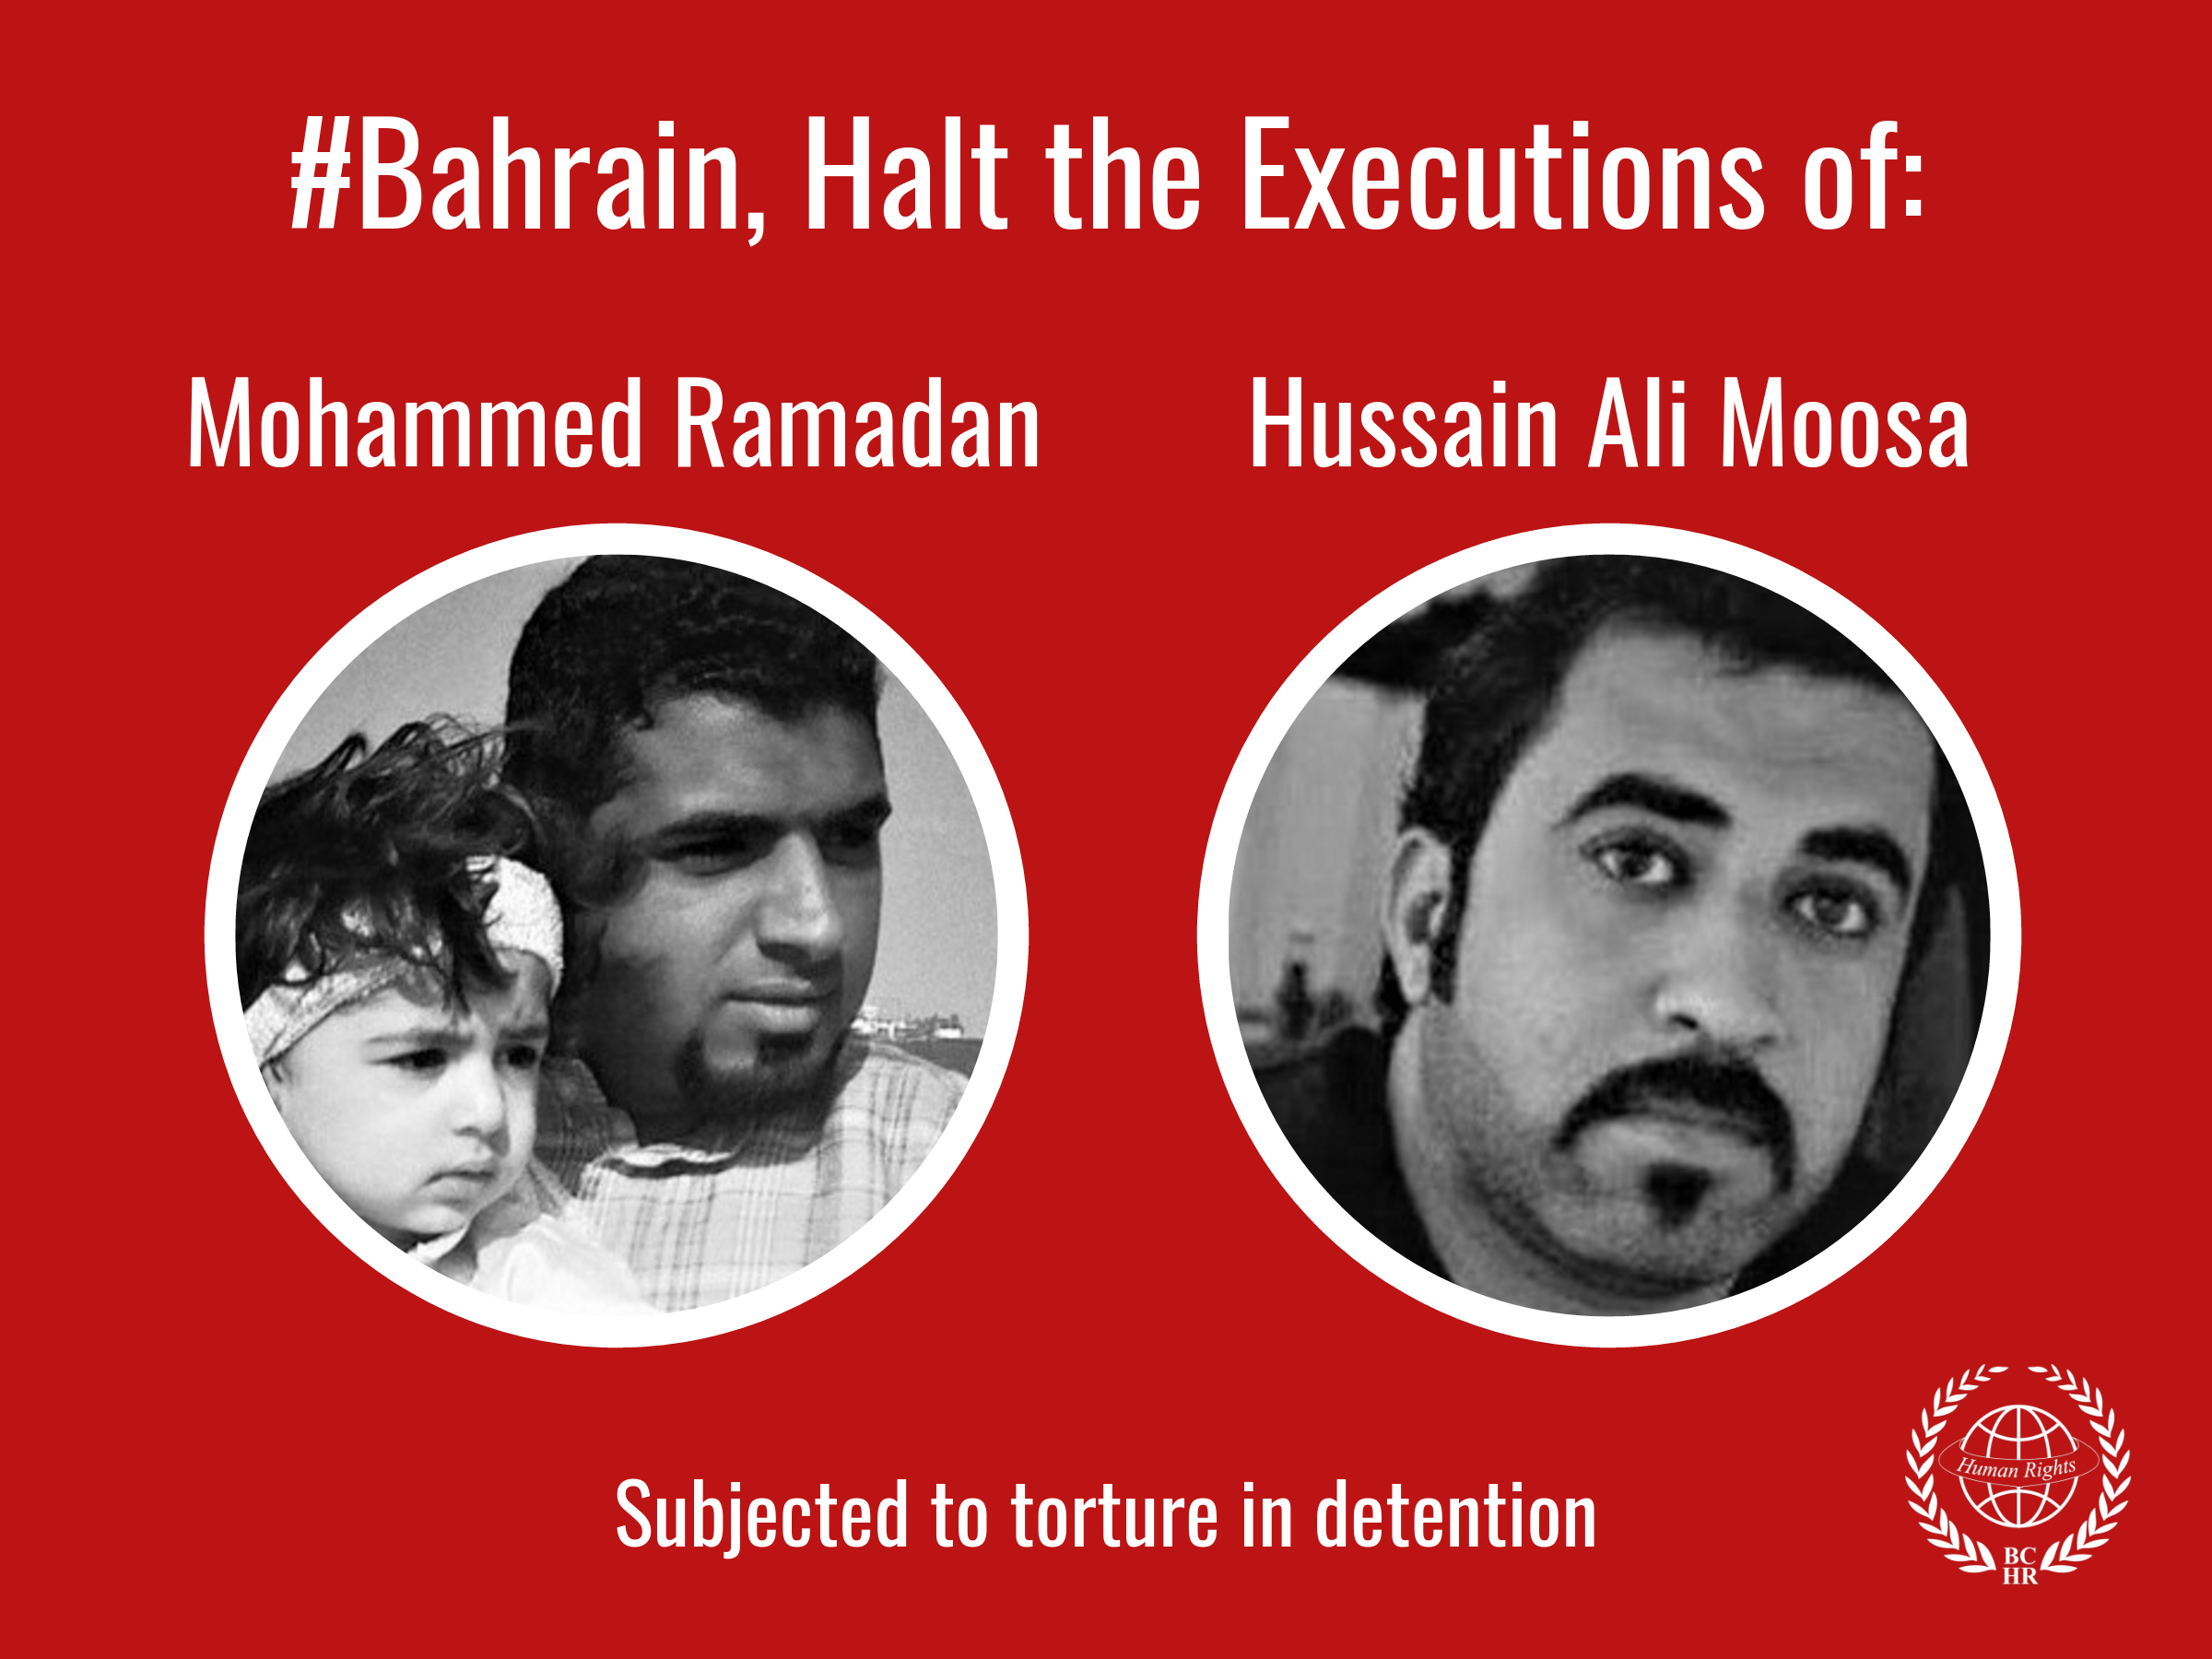 Halt the executions of Mohammed Ramadan and Hussain Ali Moosa